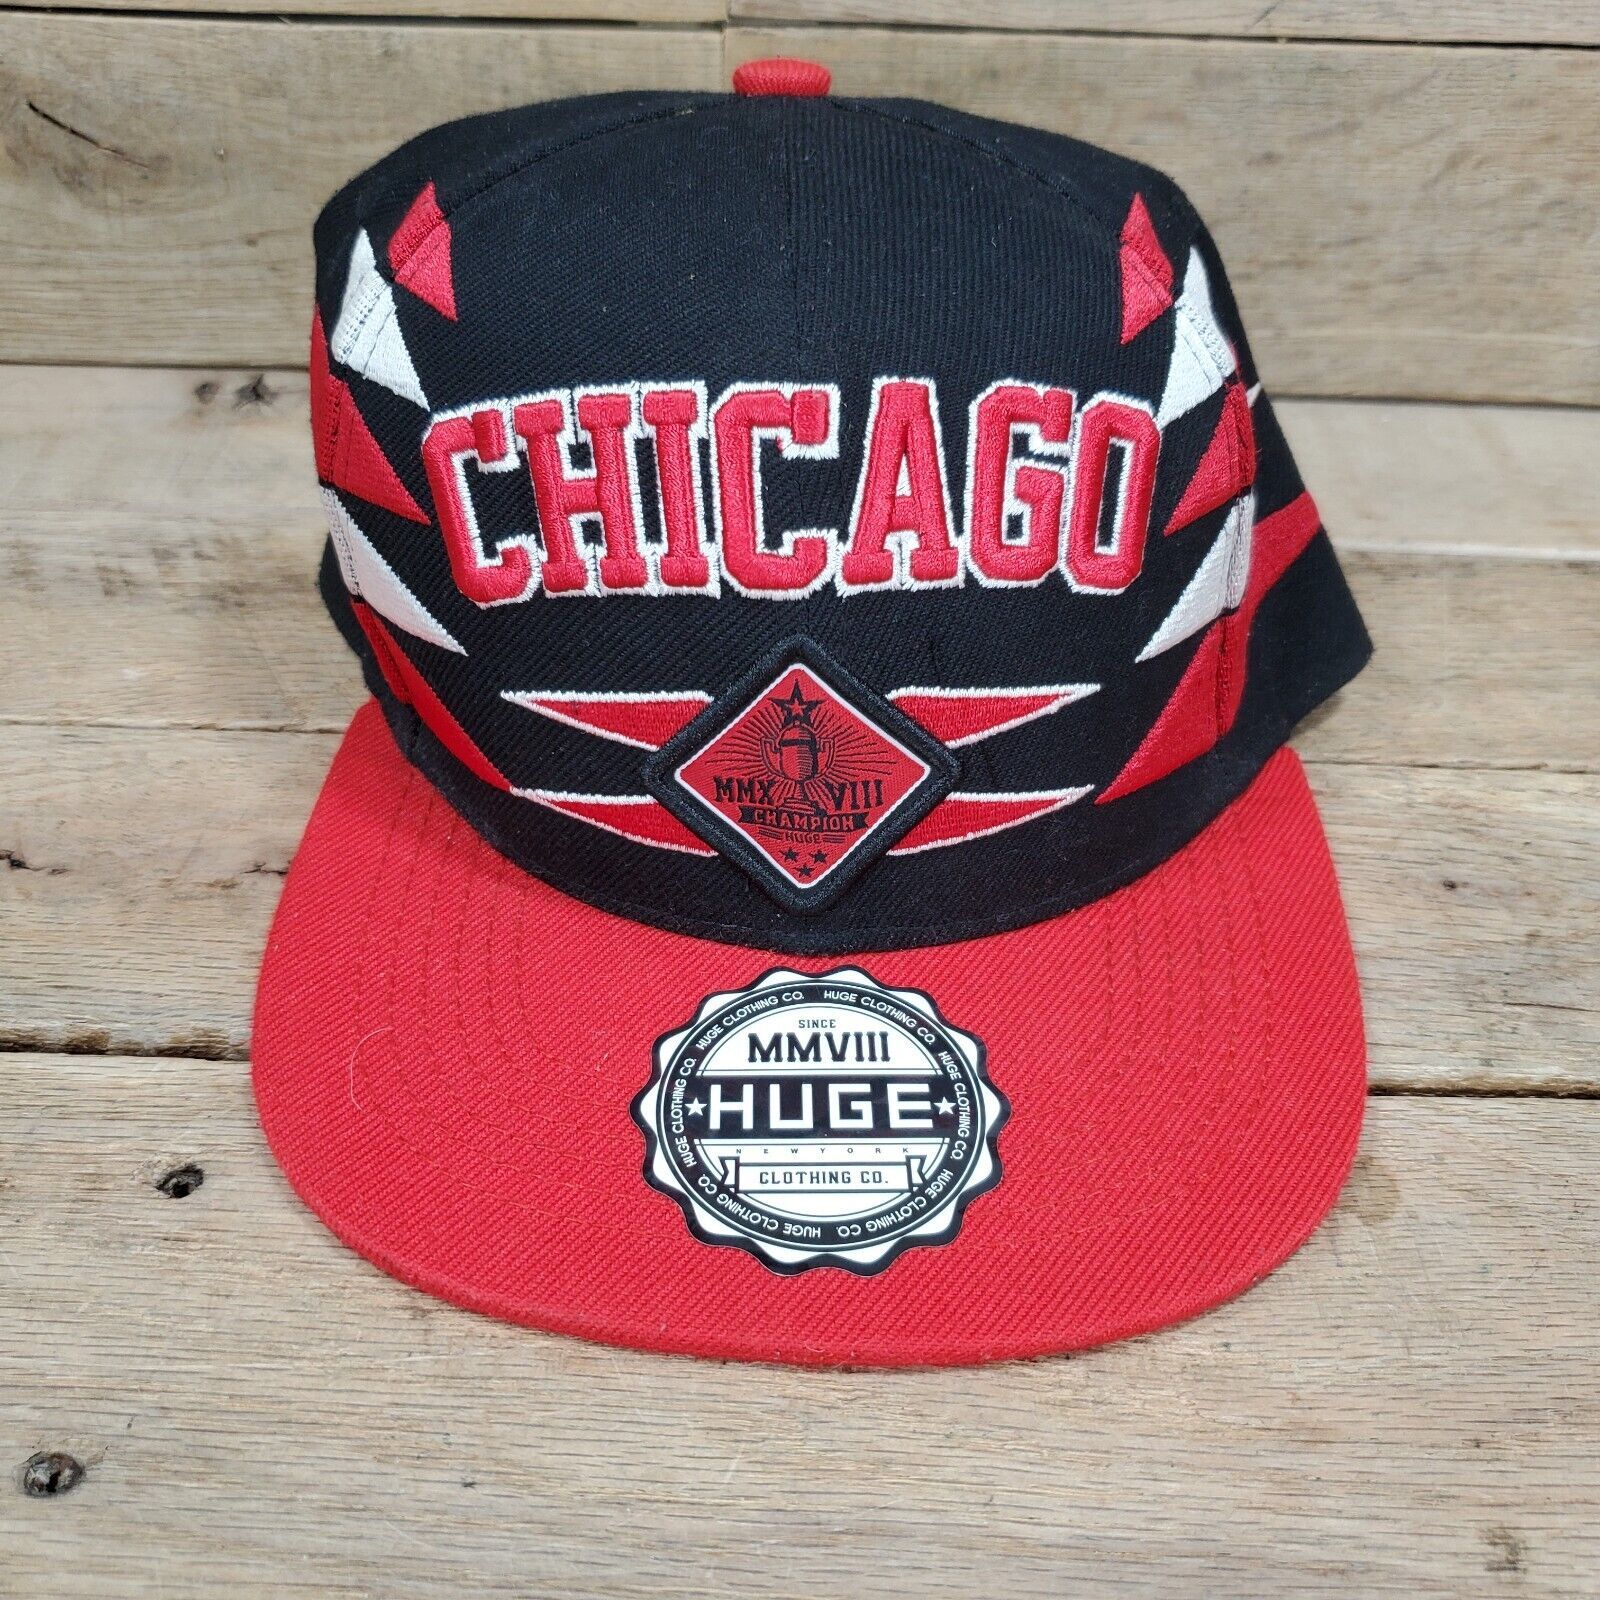 Huge Clothing CO  CHICAGO MMXVIII Champion Snapback Cap Hat - $14.80